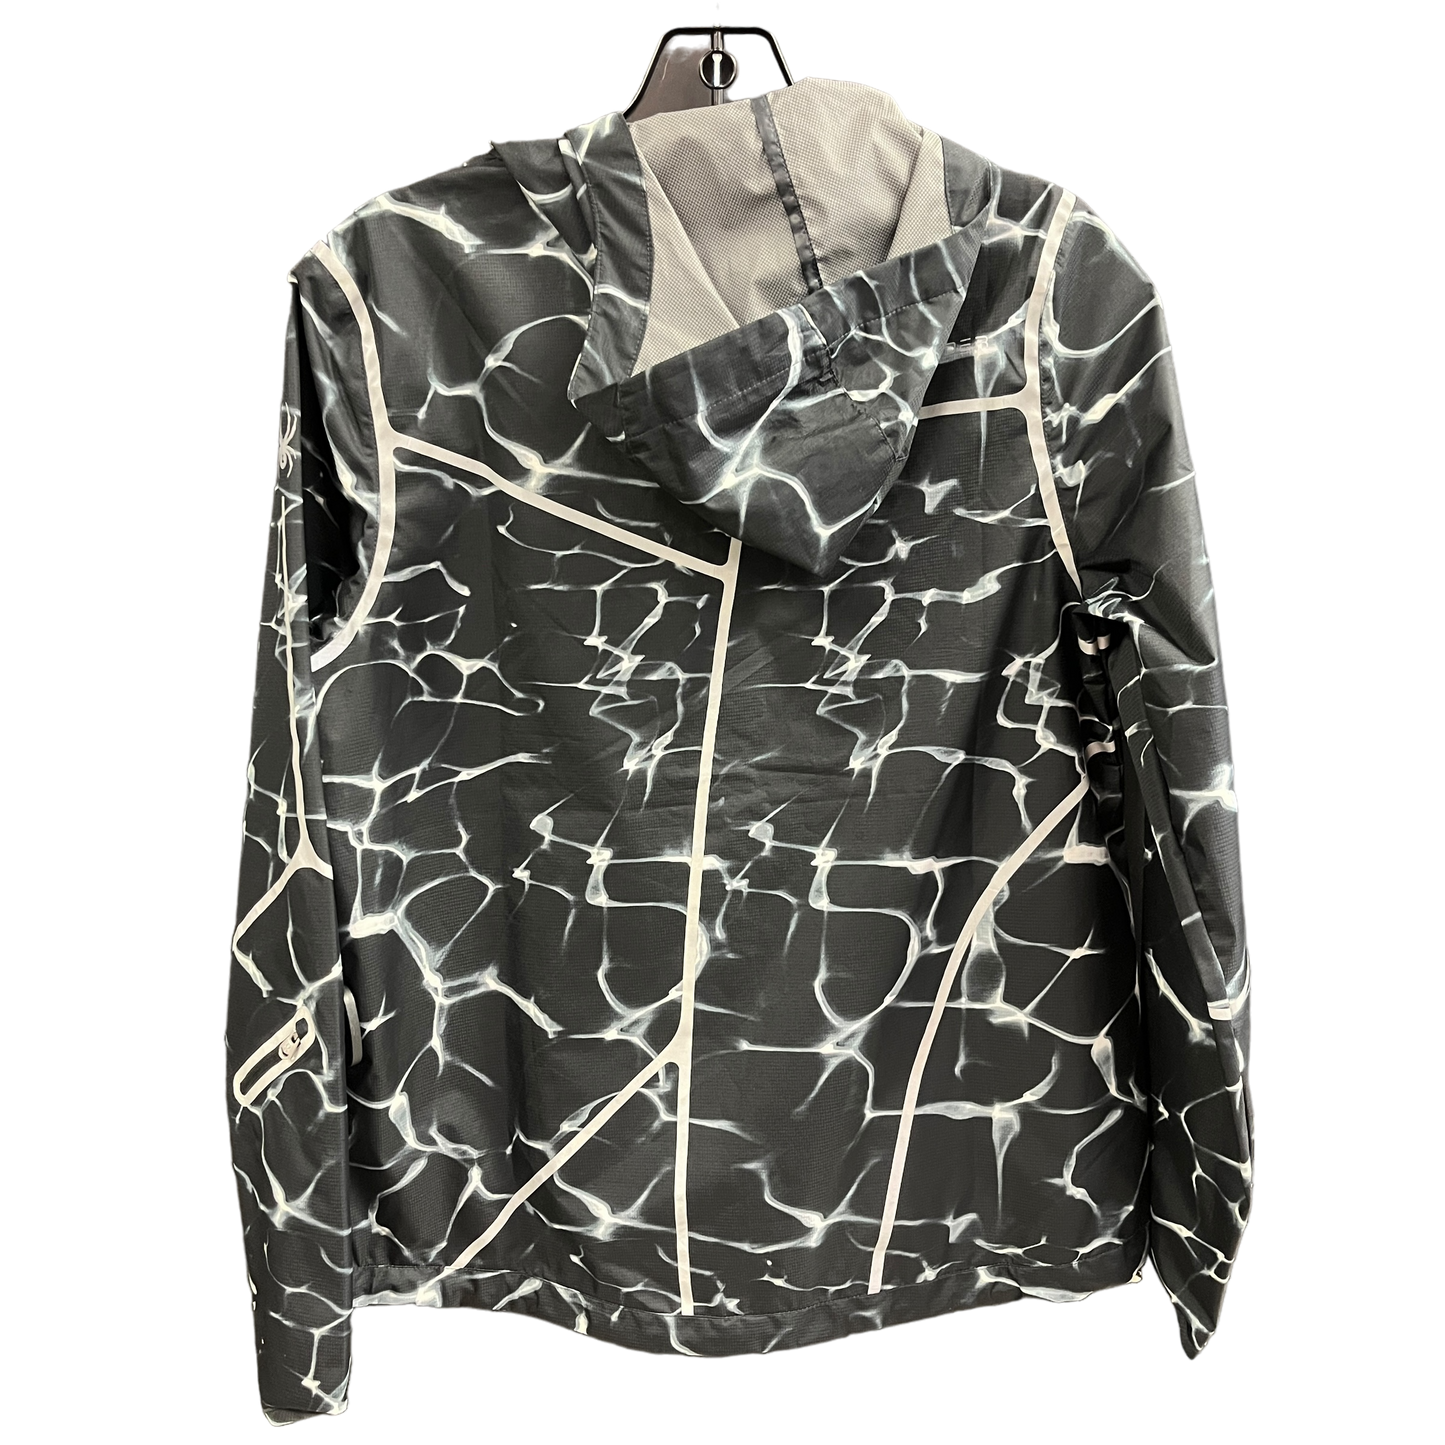 Athletic Jacket By Spyder  Size: Xxs